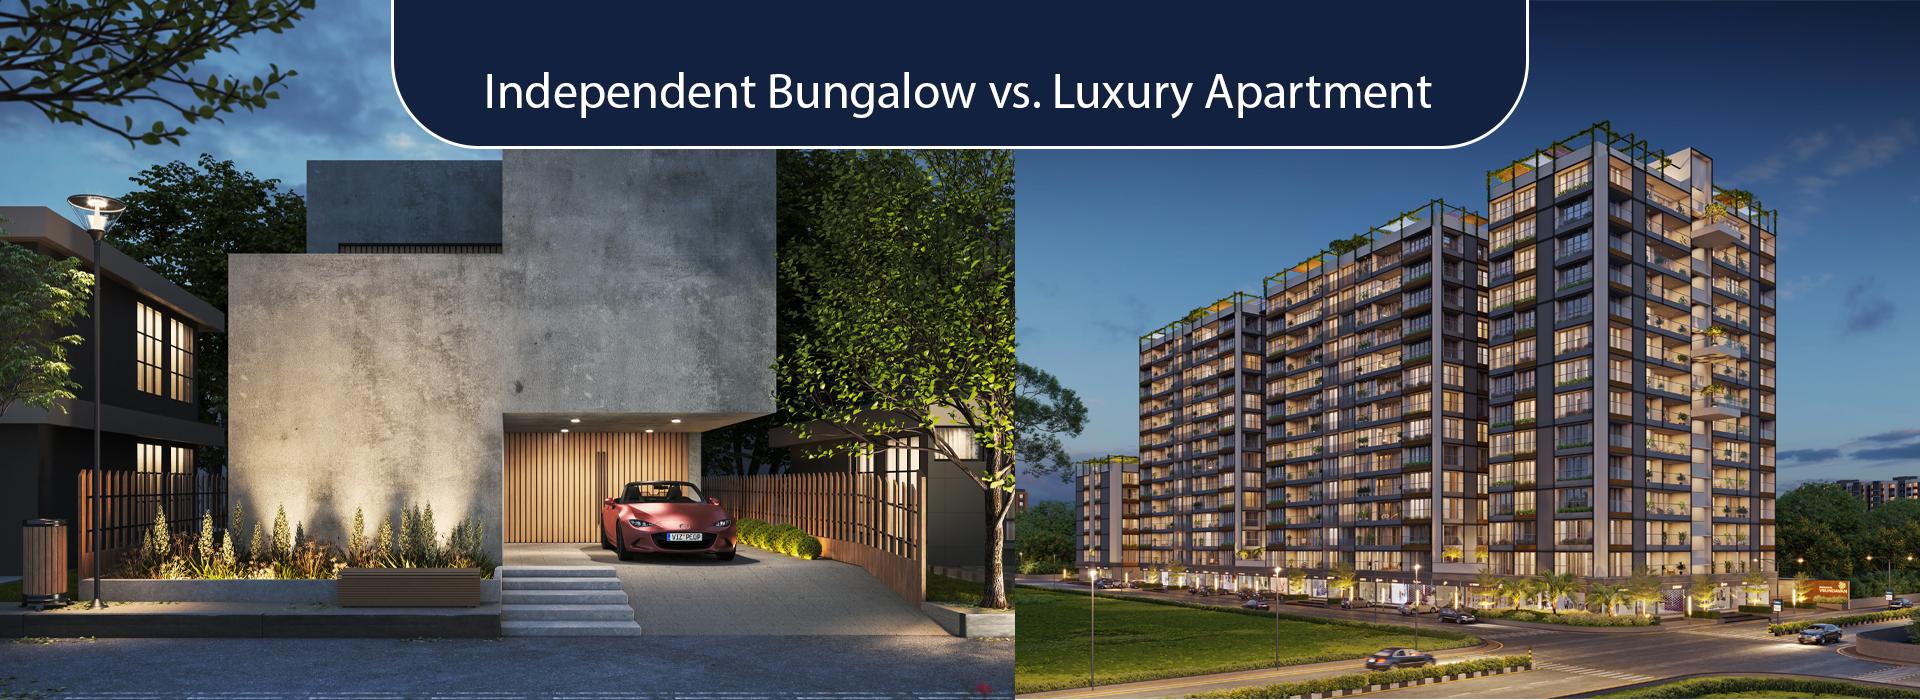 Independent Bungalow vs. Luxury Apartment